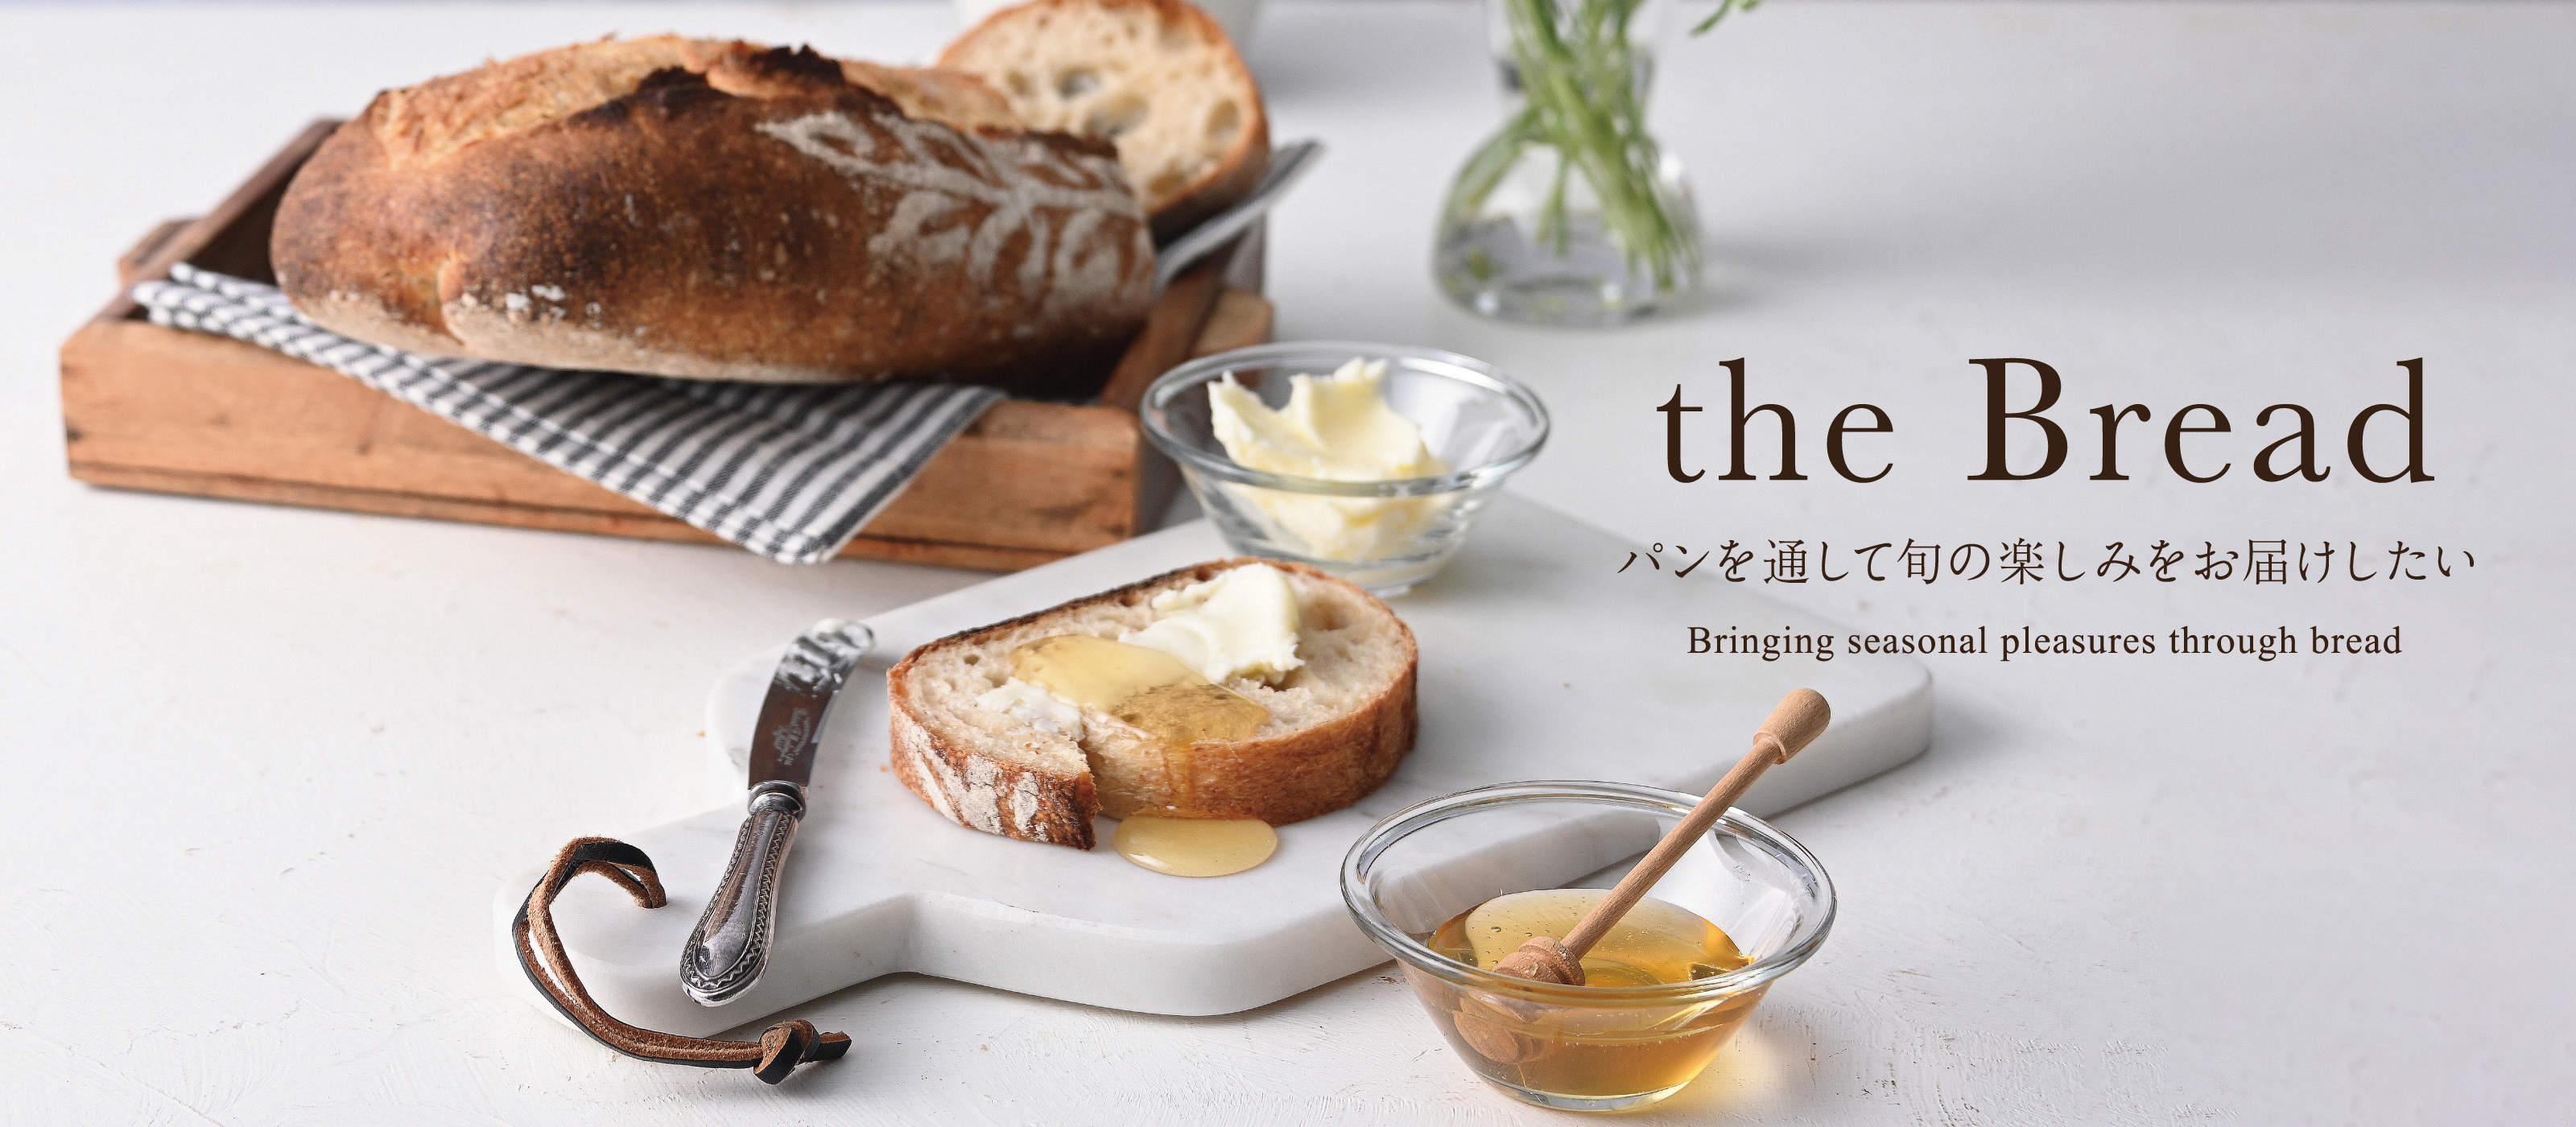 the Bread 4月